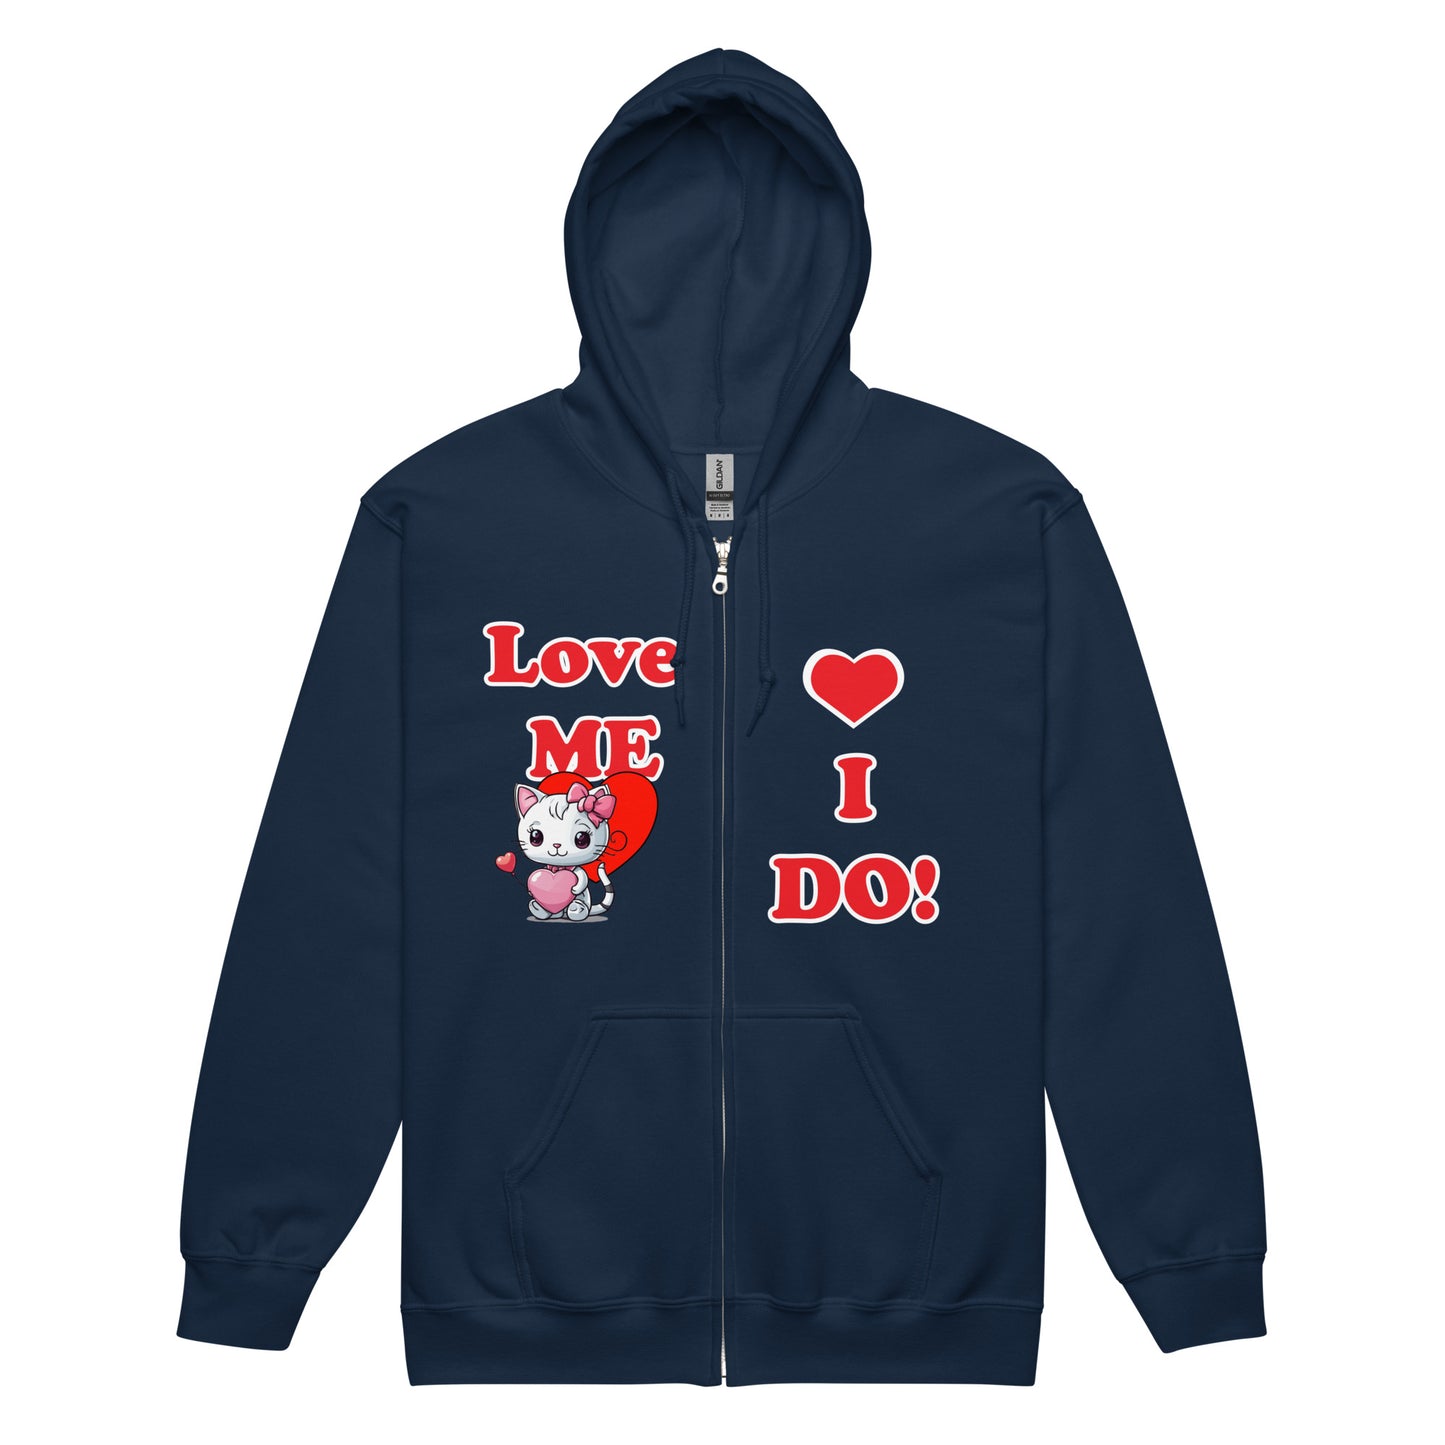 Love me, I do!Unisex heavy blend zip hoodie